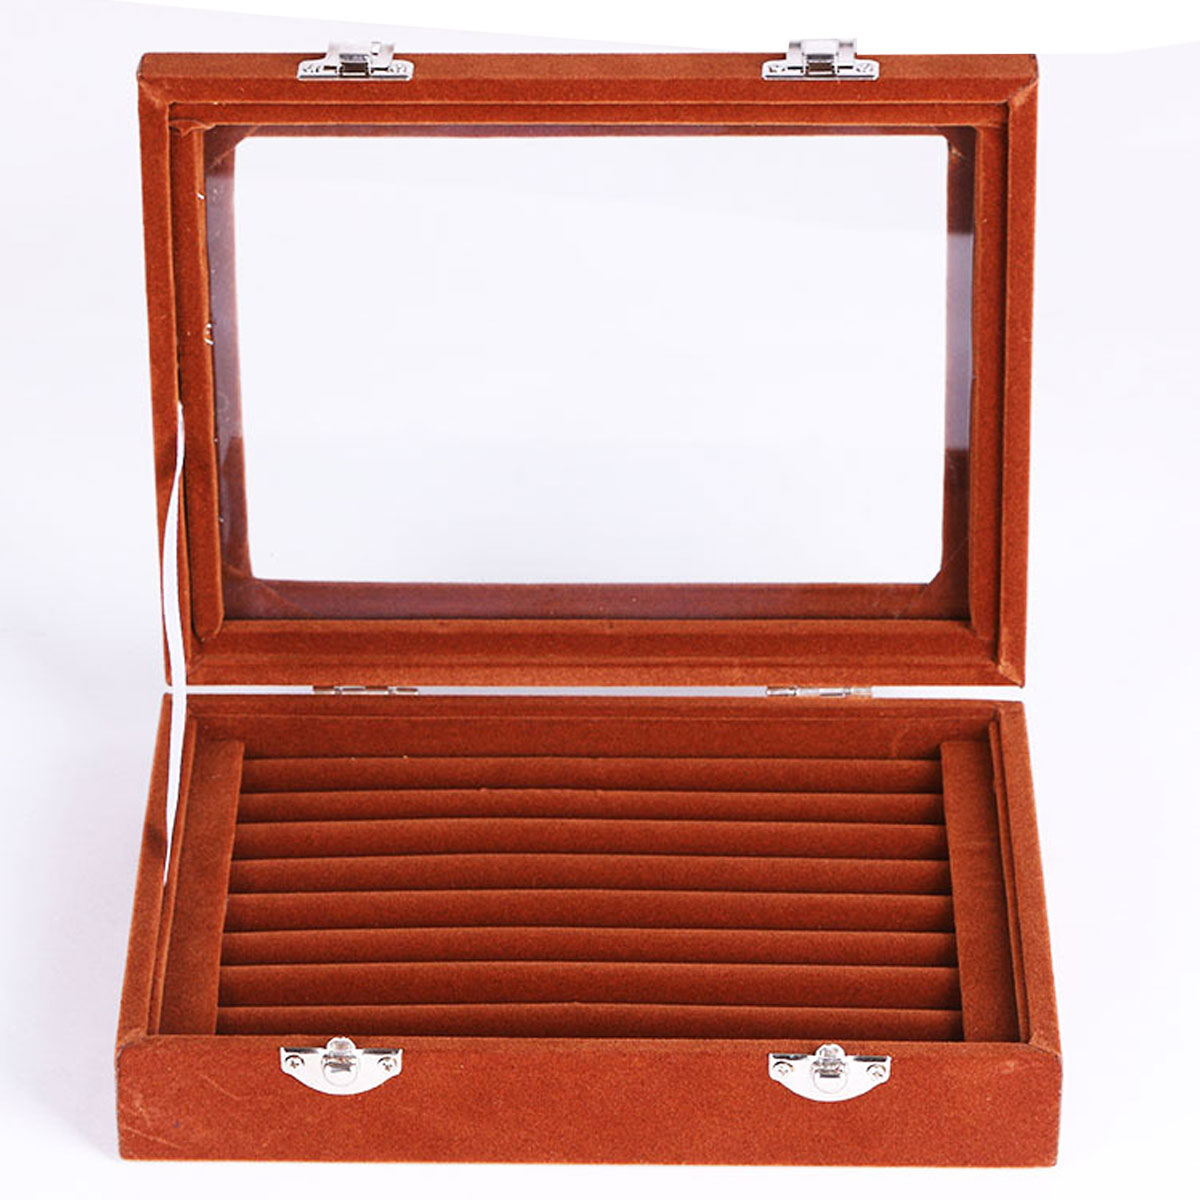 Jewelry-Velvet-Wood-Ring-Display-Organizer-Box-Tray-Holder-Earring-Storage-Case-1589869-6